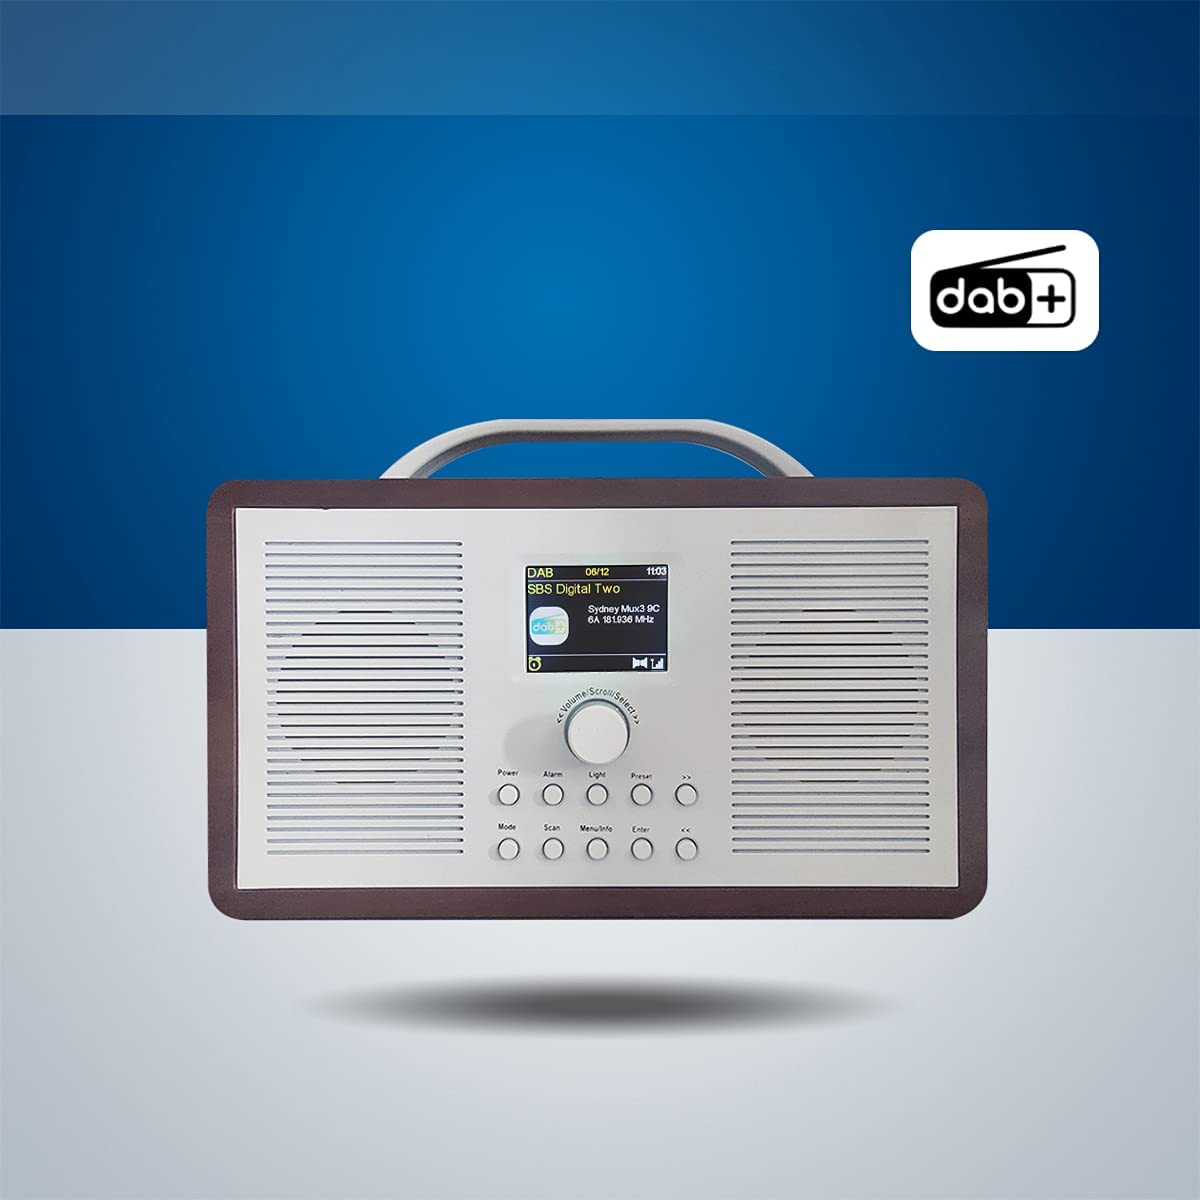 AOVOTO FM/DAB+ Bluetooth Aux In multifunctional Radio,wooden color DAB radio for room & kitchen,DAB radio with alarm & sleep mode (DAB_TB_04)